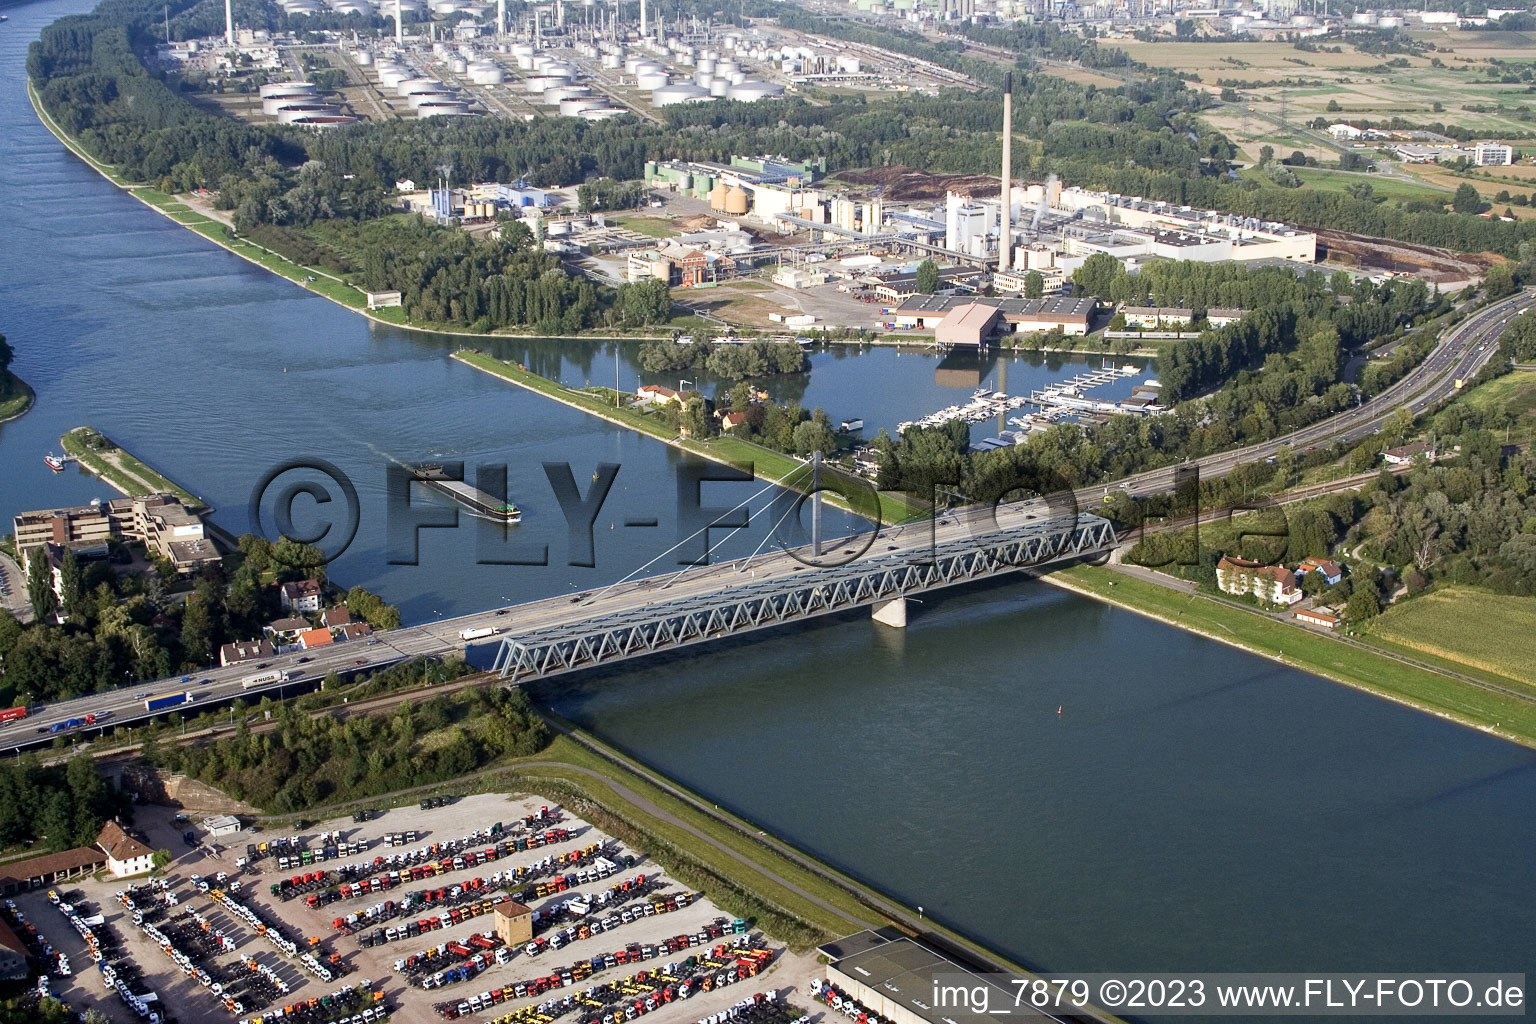 Aerial photograpy of Rhine bridge in the district Maximiliansau in Wörth am Rhein in the state Rhineland-Palatinate, Germany